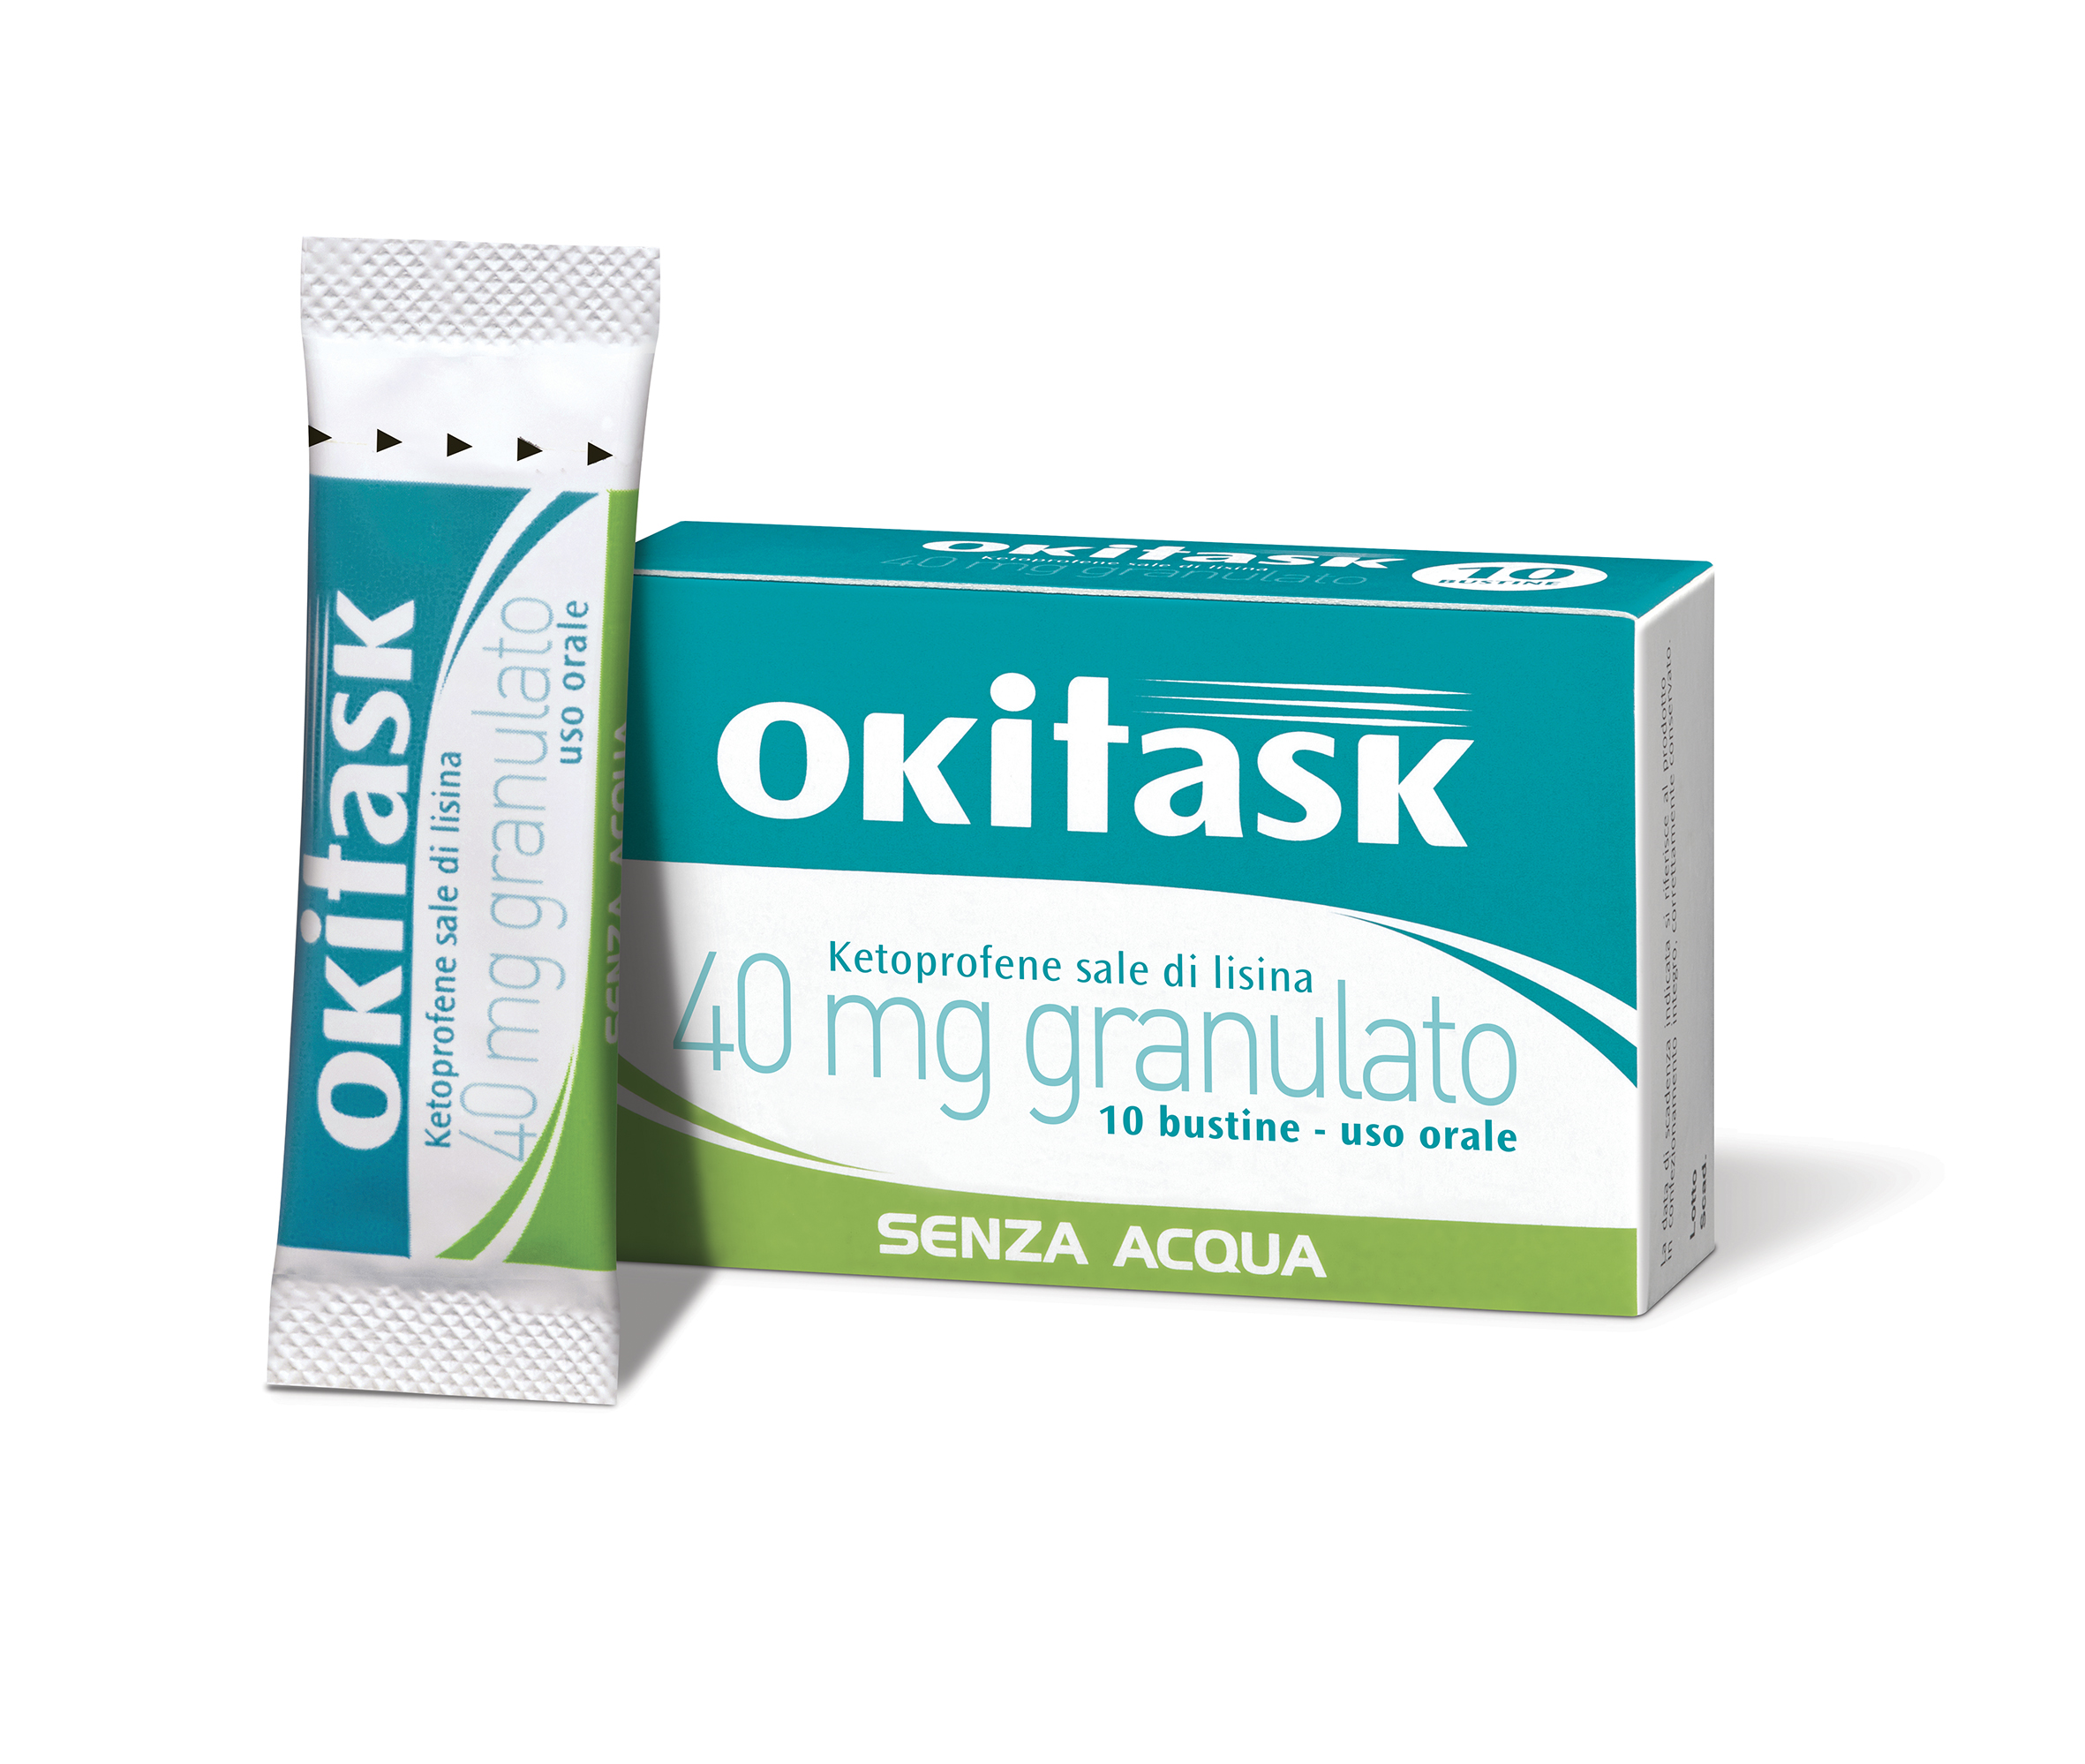 Image of Okitask 40 mg Ketoprofene Sale di Lisina 10 Bustine